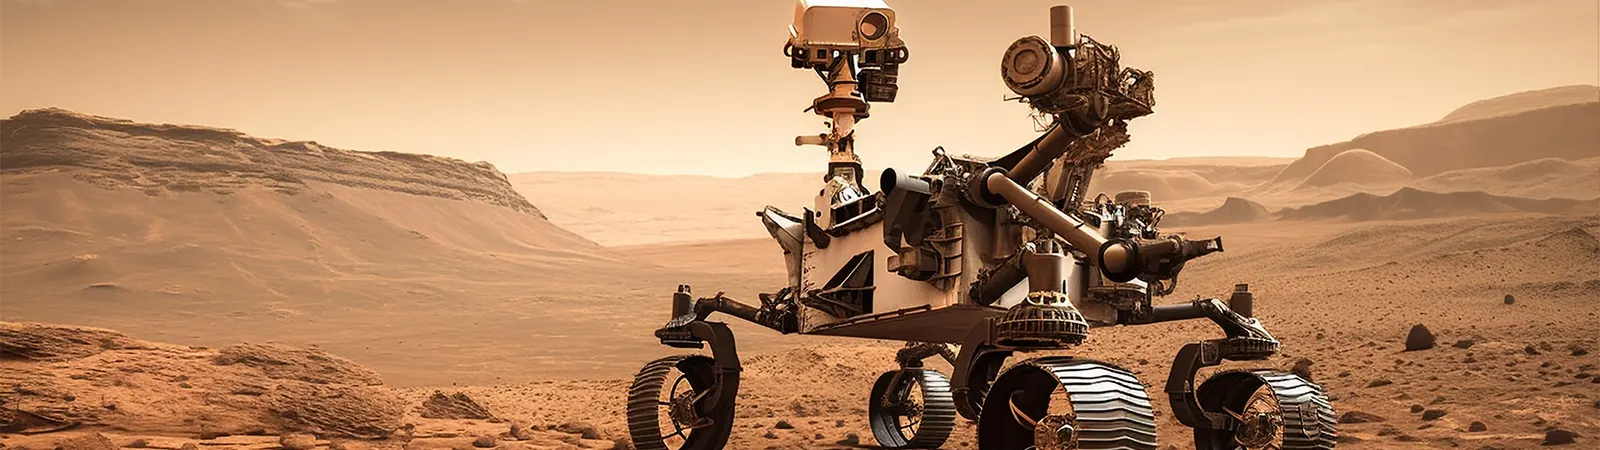 Mars Rover - 2